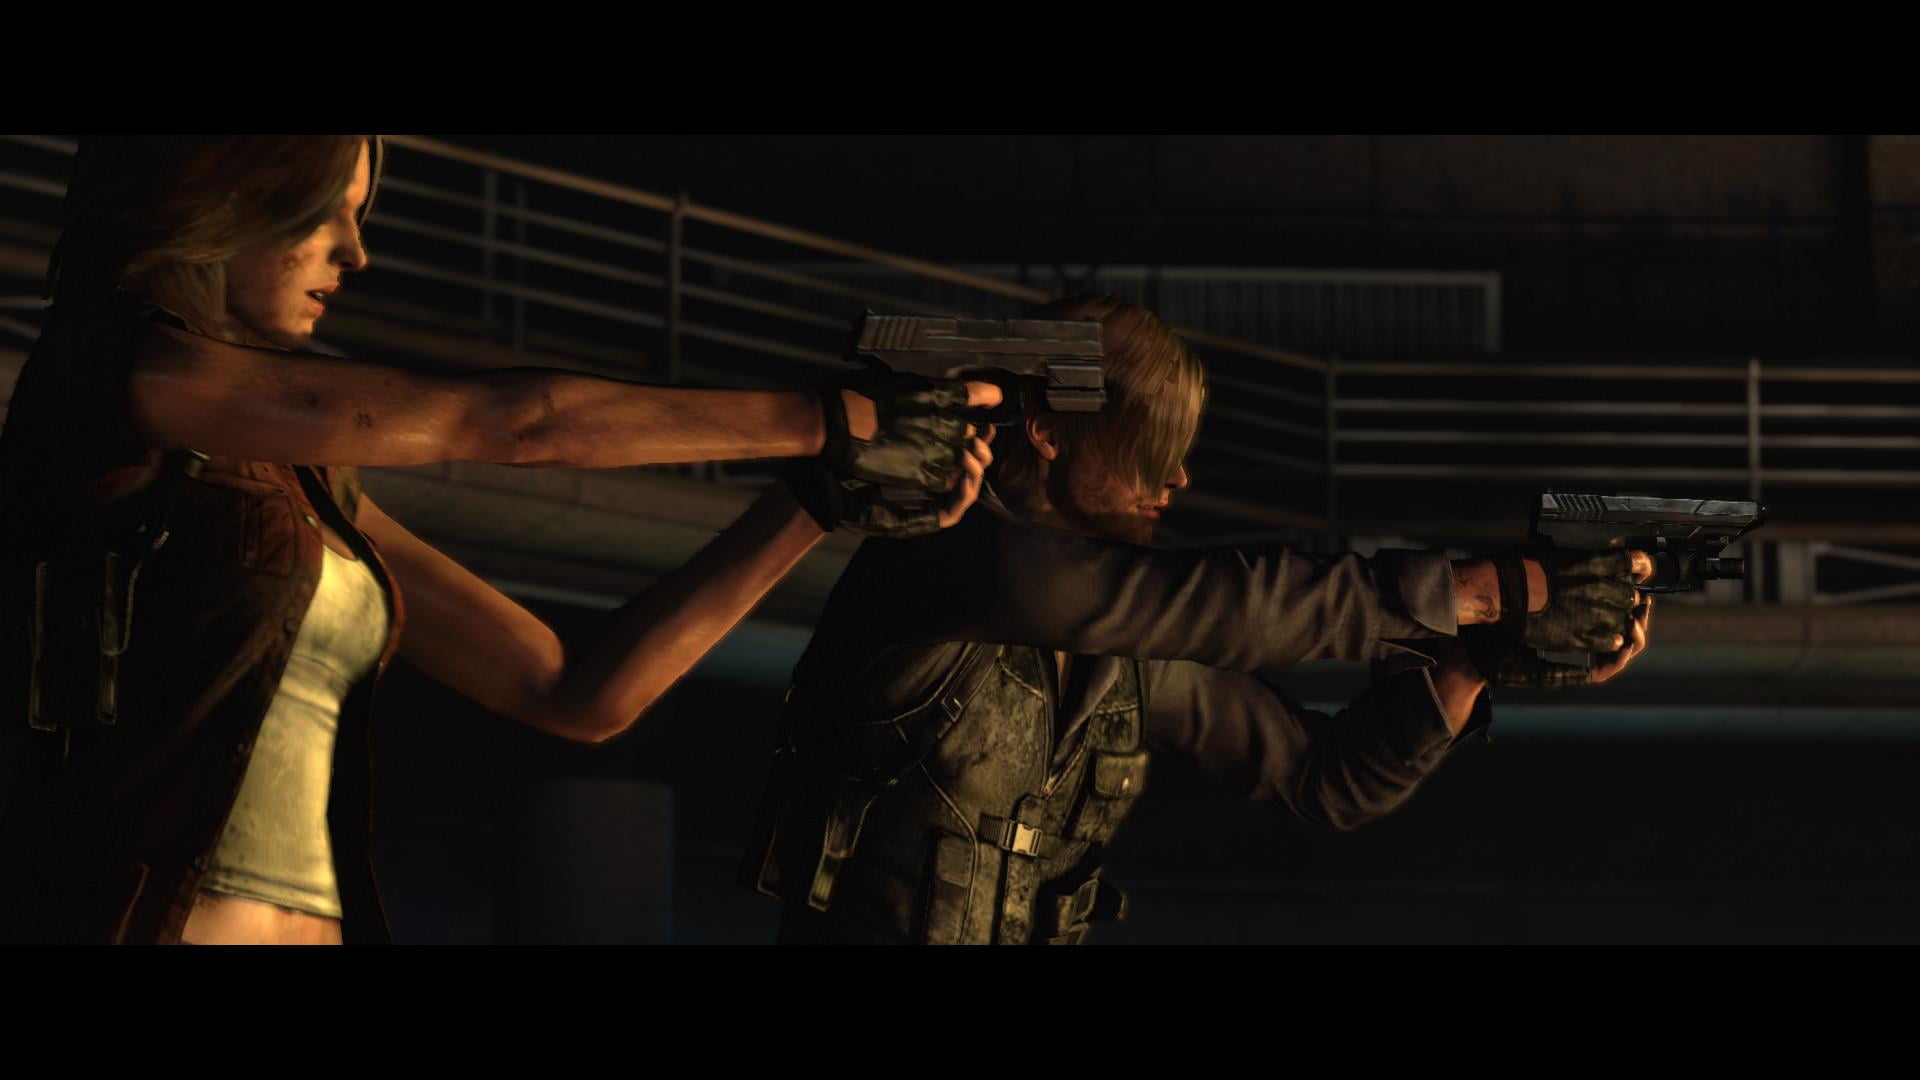 Capcom Resident Evil 6, Video Games - PlayStation 4